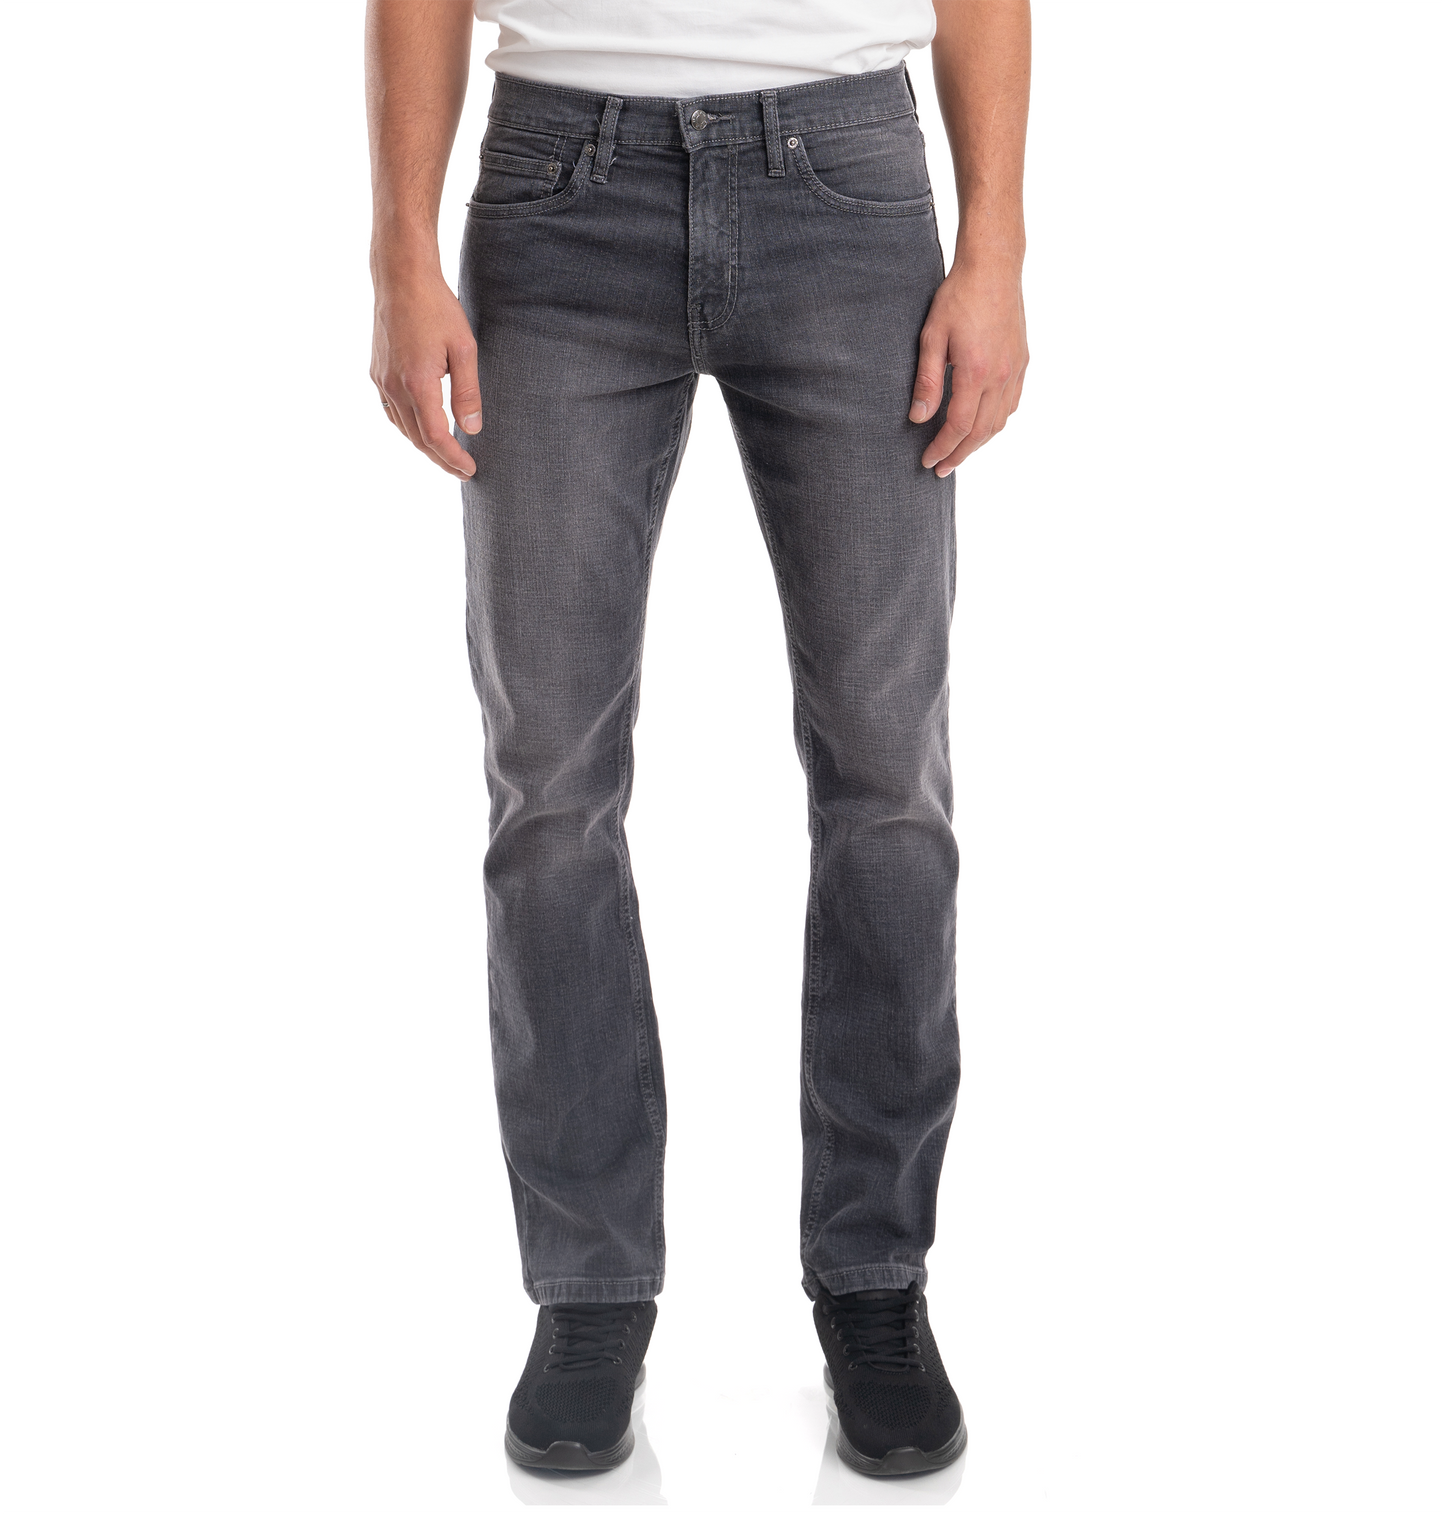 Men's SUKO Jeans by Roadrunner DARK Denim Apparel 30x31 Teen HARD